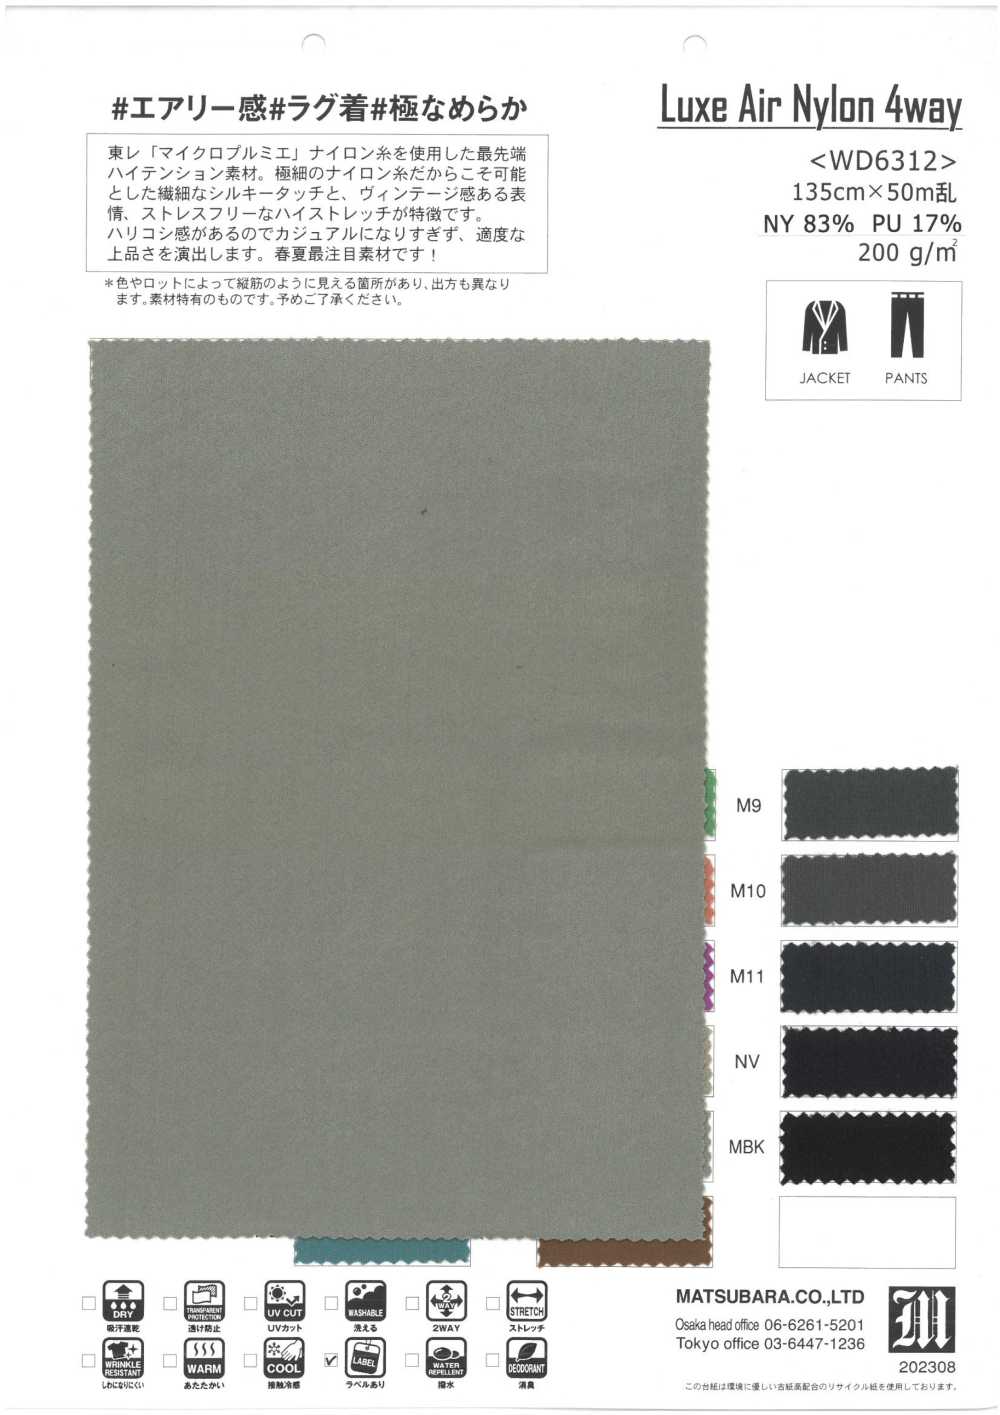 WD6312 Luxe Air Nylon 4way[Textile / Fabric] Matsubara